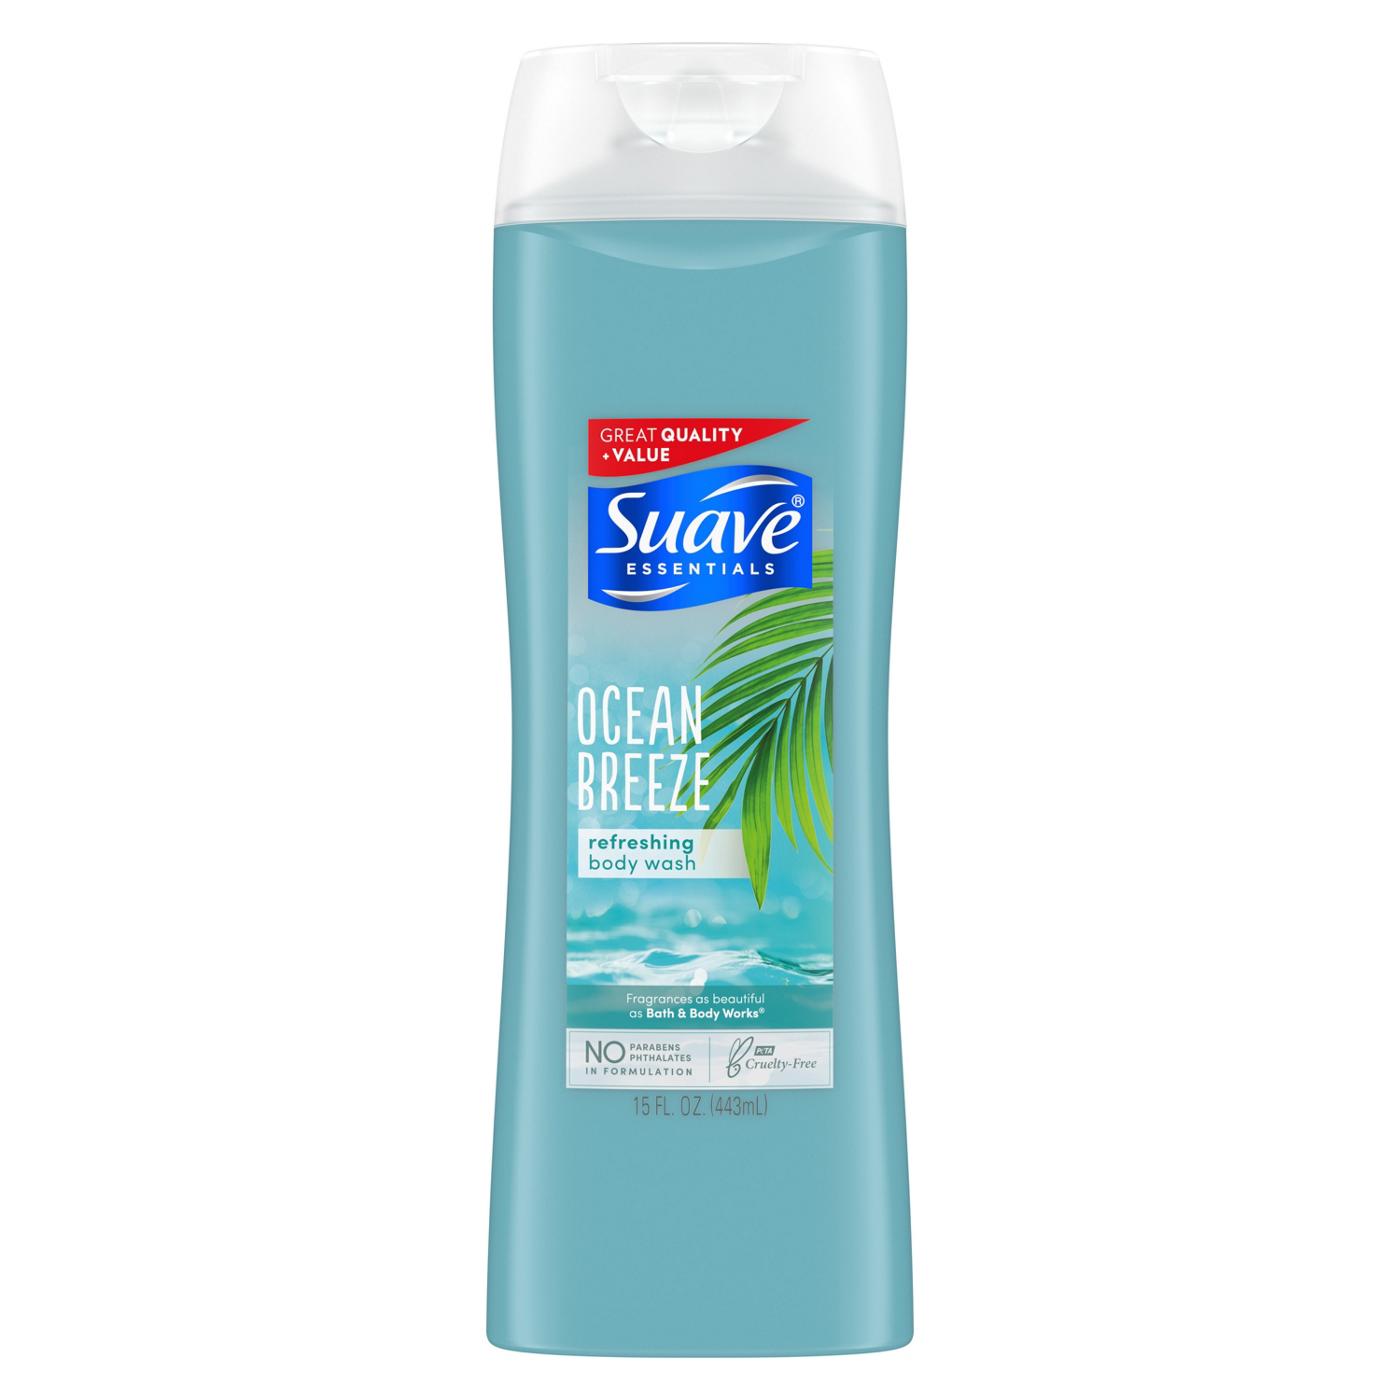 Suave Essentials Ocean Breeze Body Wash; image 1 of 10